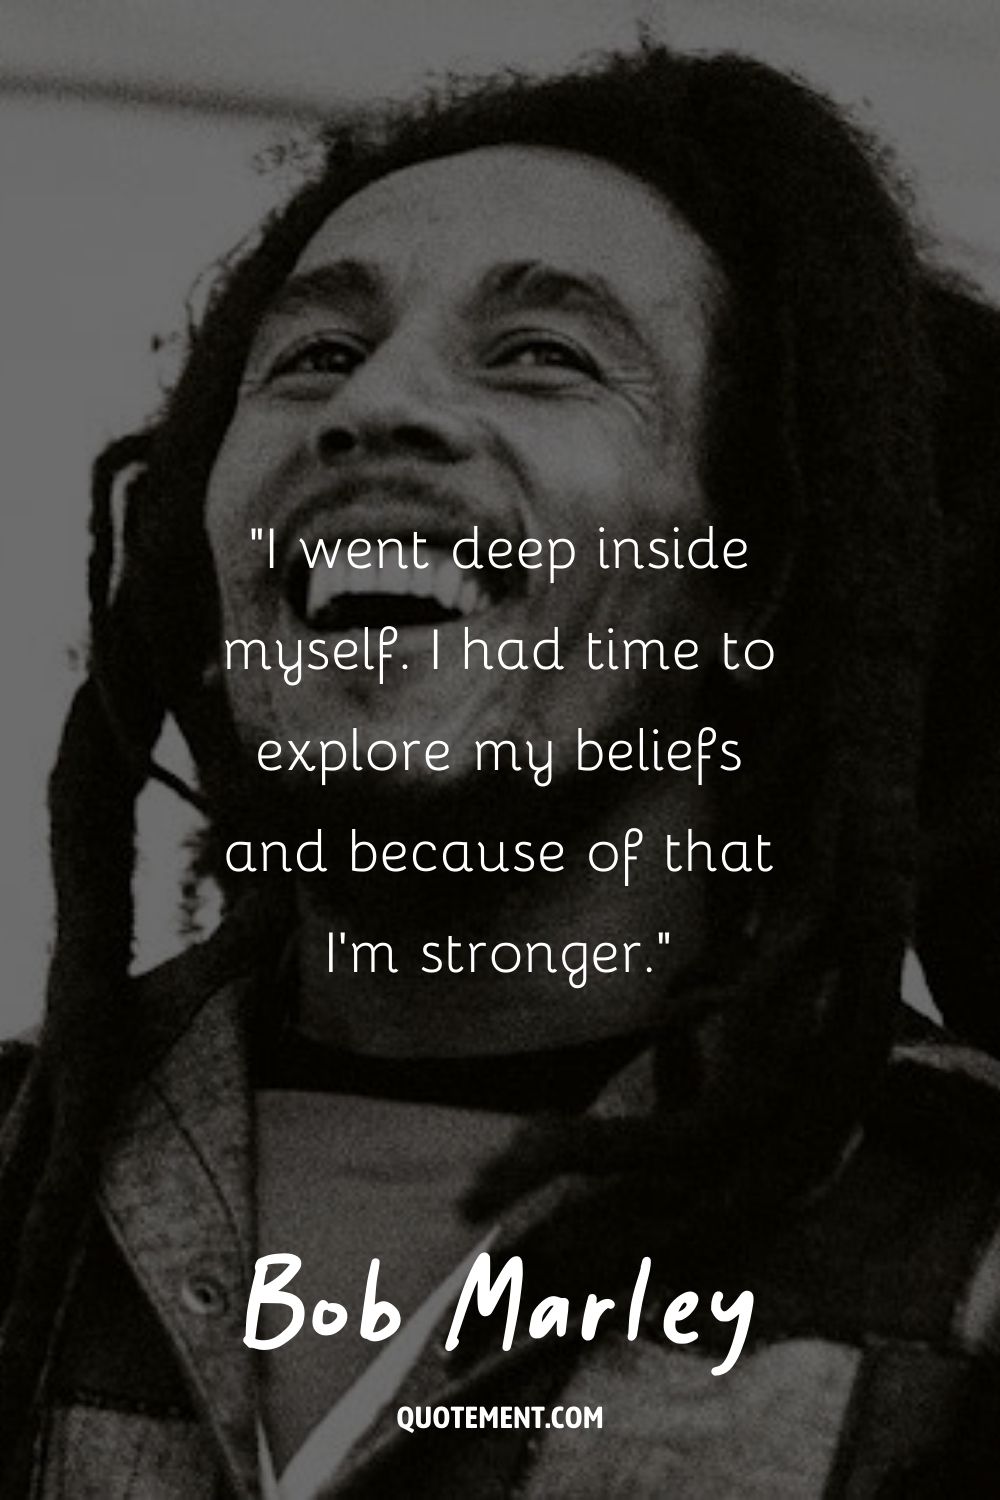 Bob Marley smiling broadly
